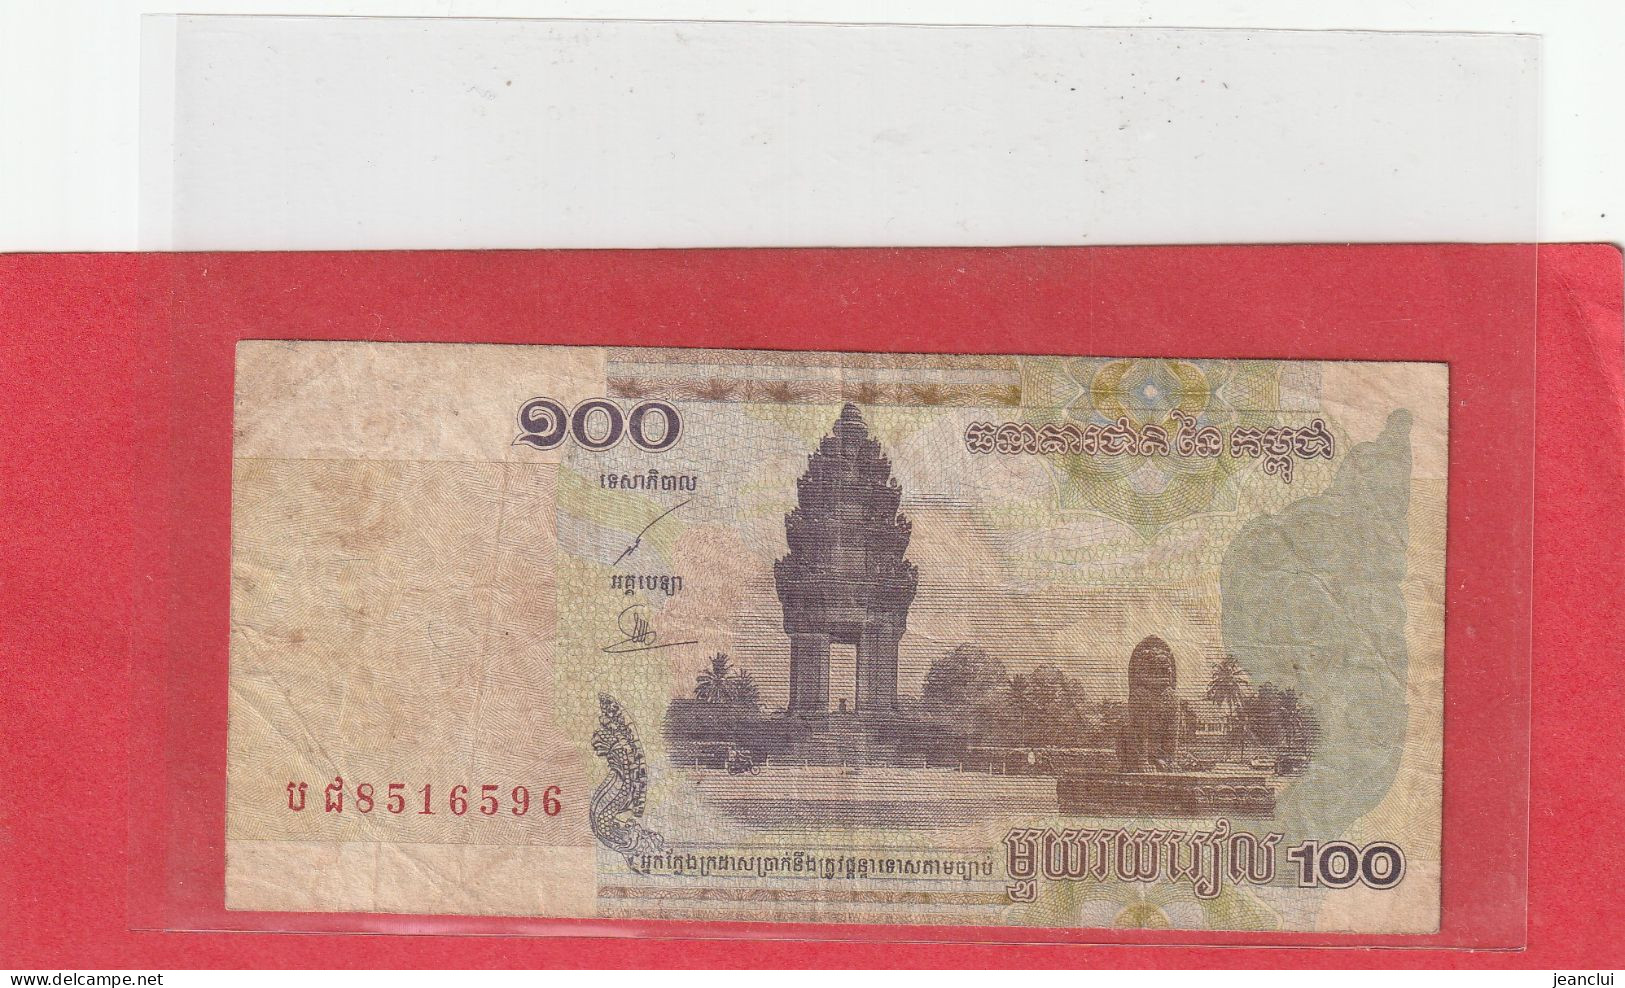 BANQUE NATIONALE DU CAMBODGE  .  100 RIELS  . 2001  . N°  8516596  .  BILLET USITE  .  2 SCANNES - Cambodia